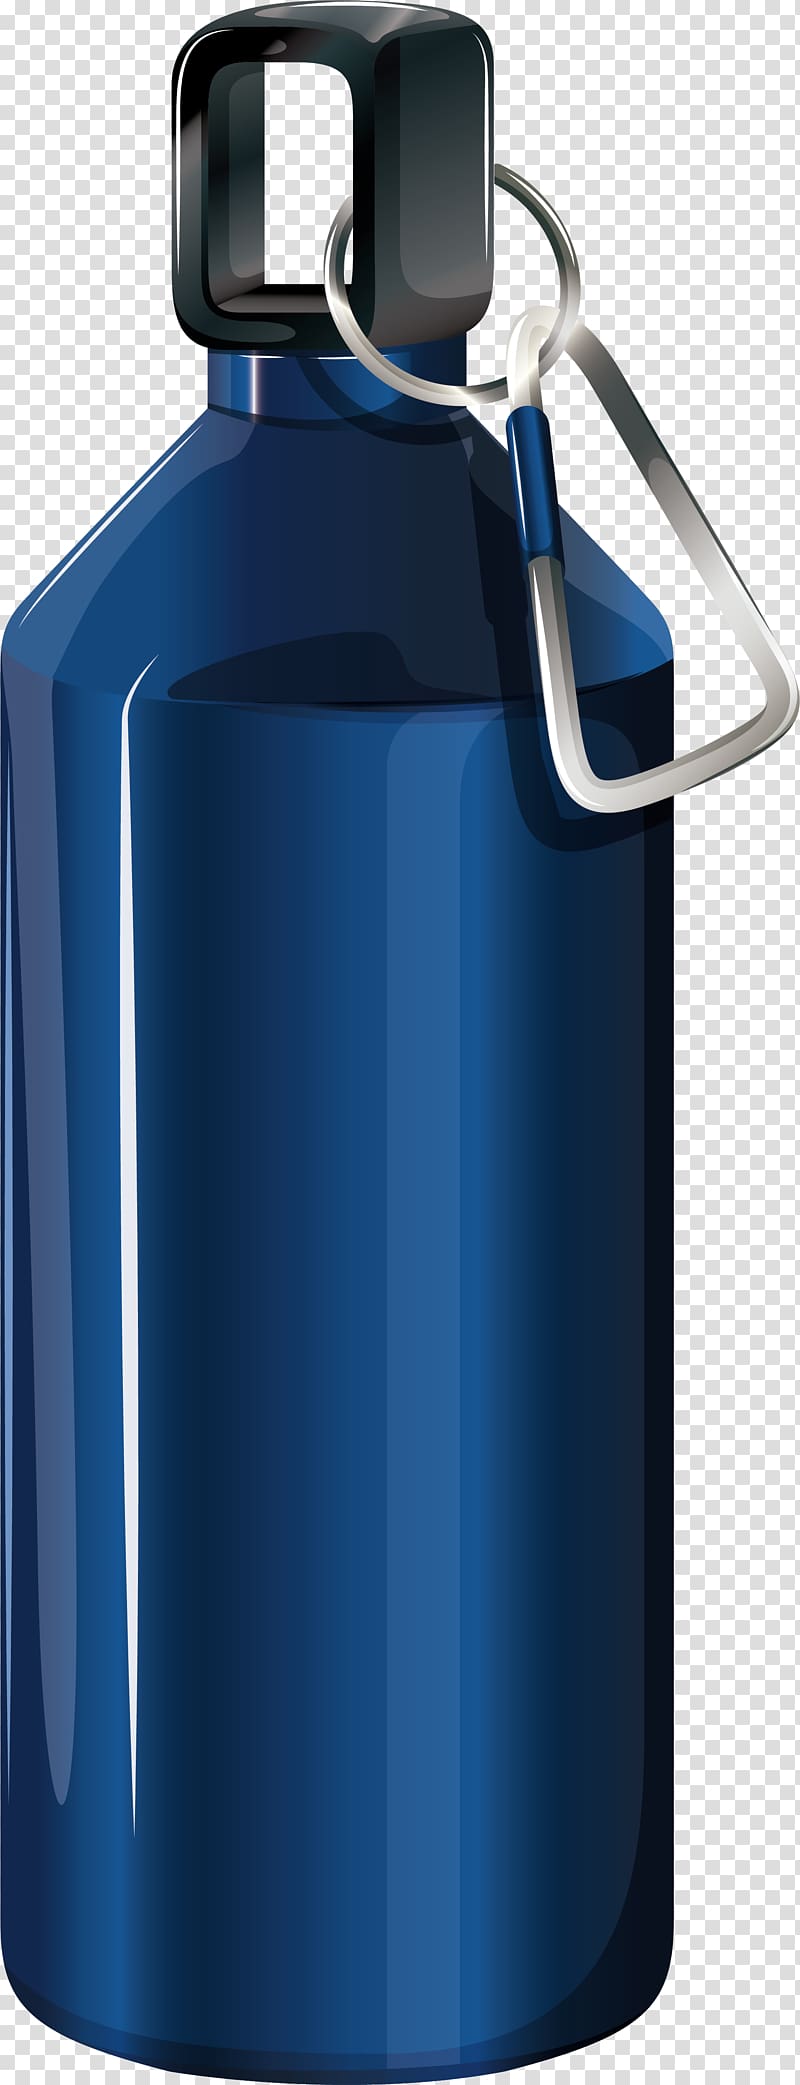 Water bottle Euclidean Illustration, Blue cup transparent background PNG clipart